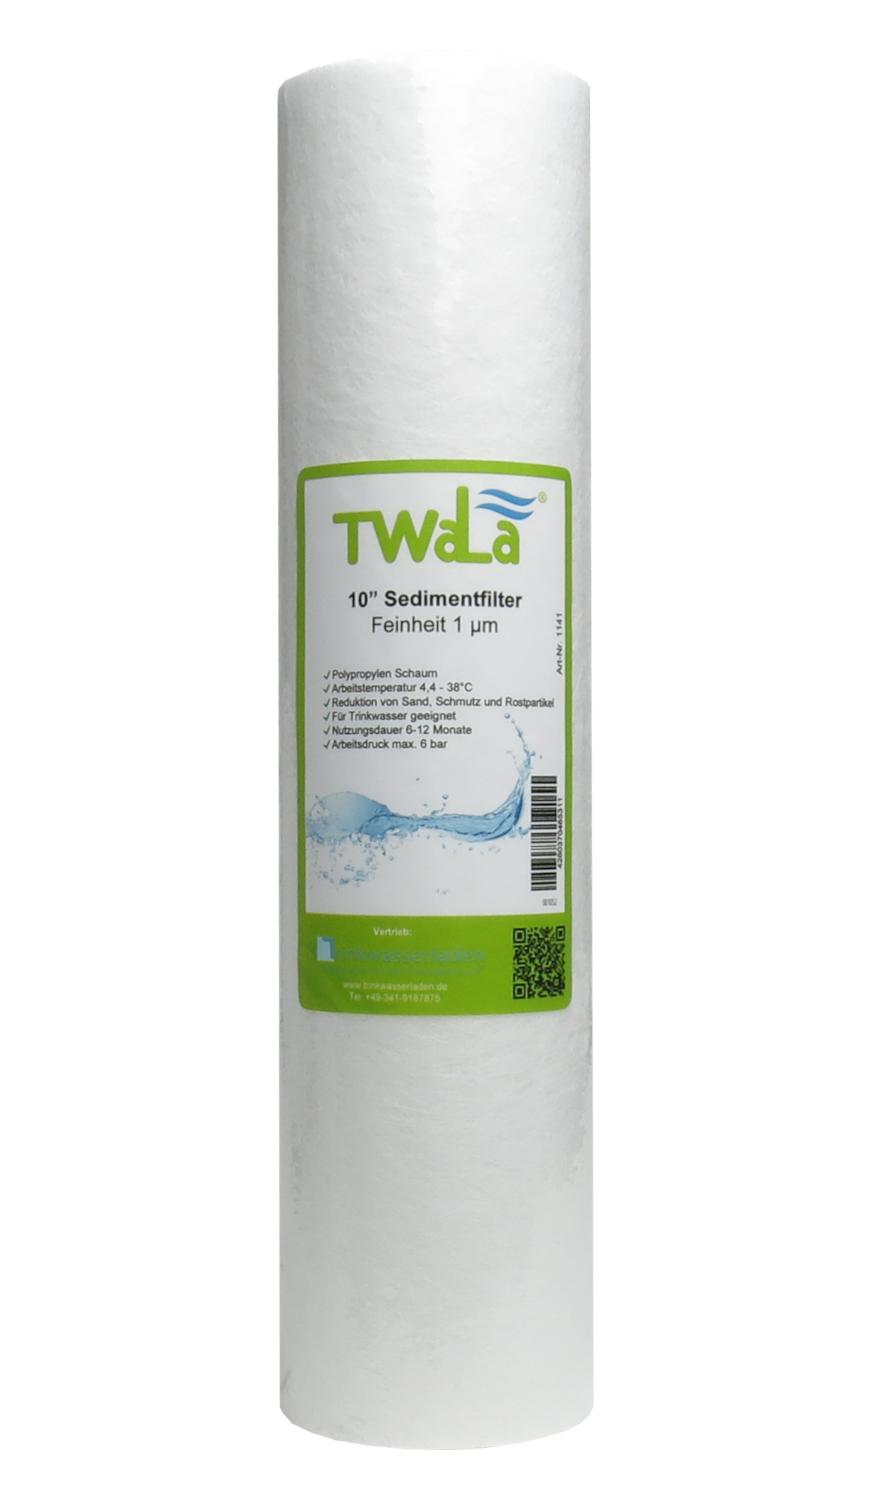 TWaLa Sedimentfilter 10''